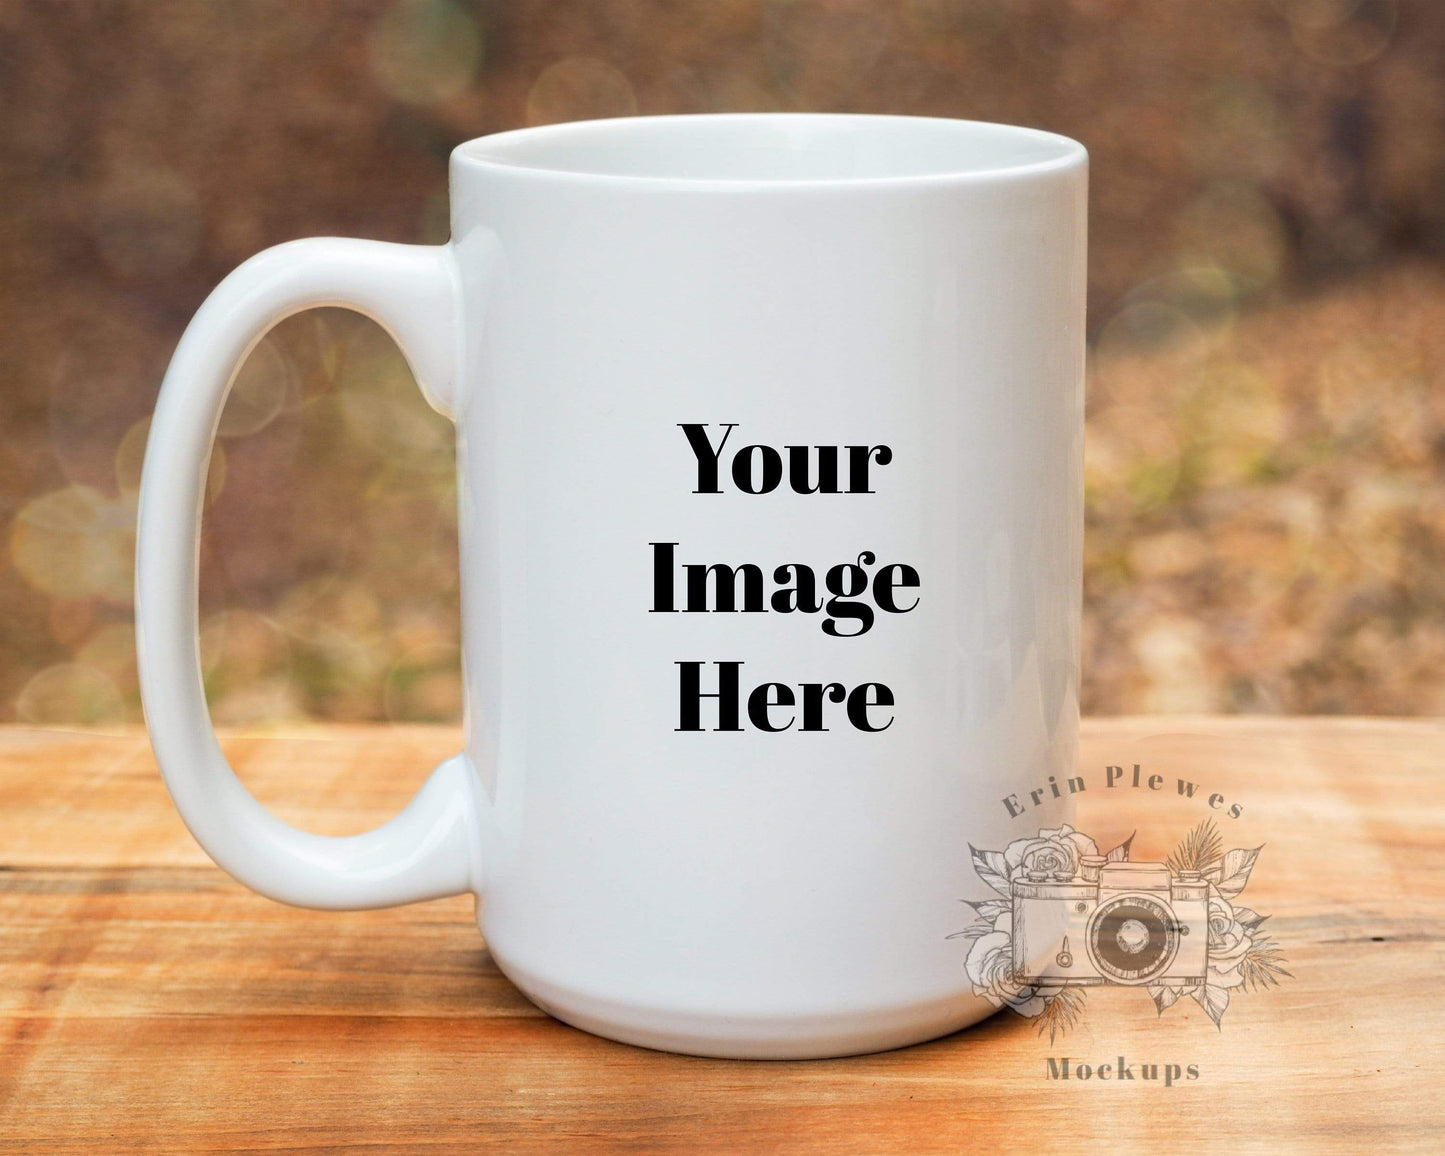 Erin Plewes Mockups White Mug Mockup, Coffee Mug Mock Up for Stock Photo, Left Hand Mug Template for Printful, Digital Download Template JPG